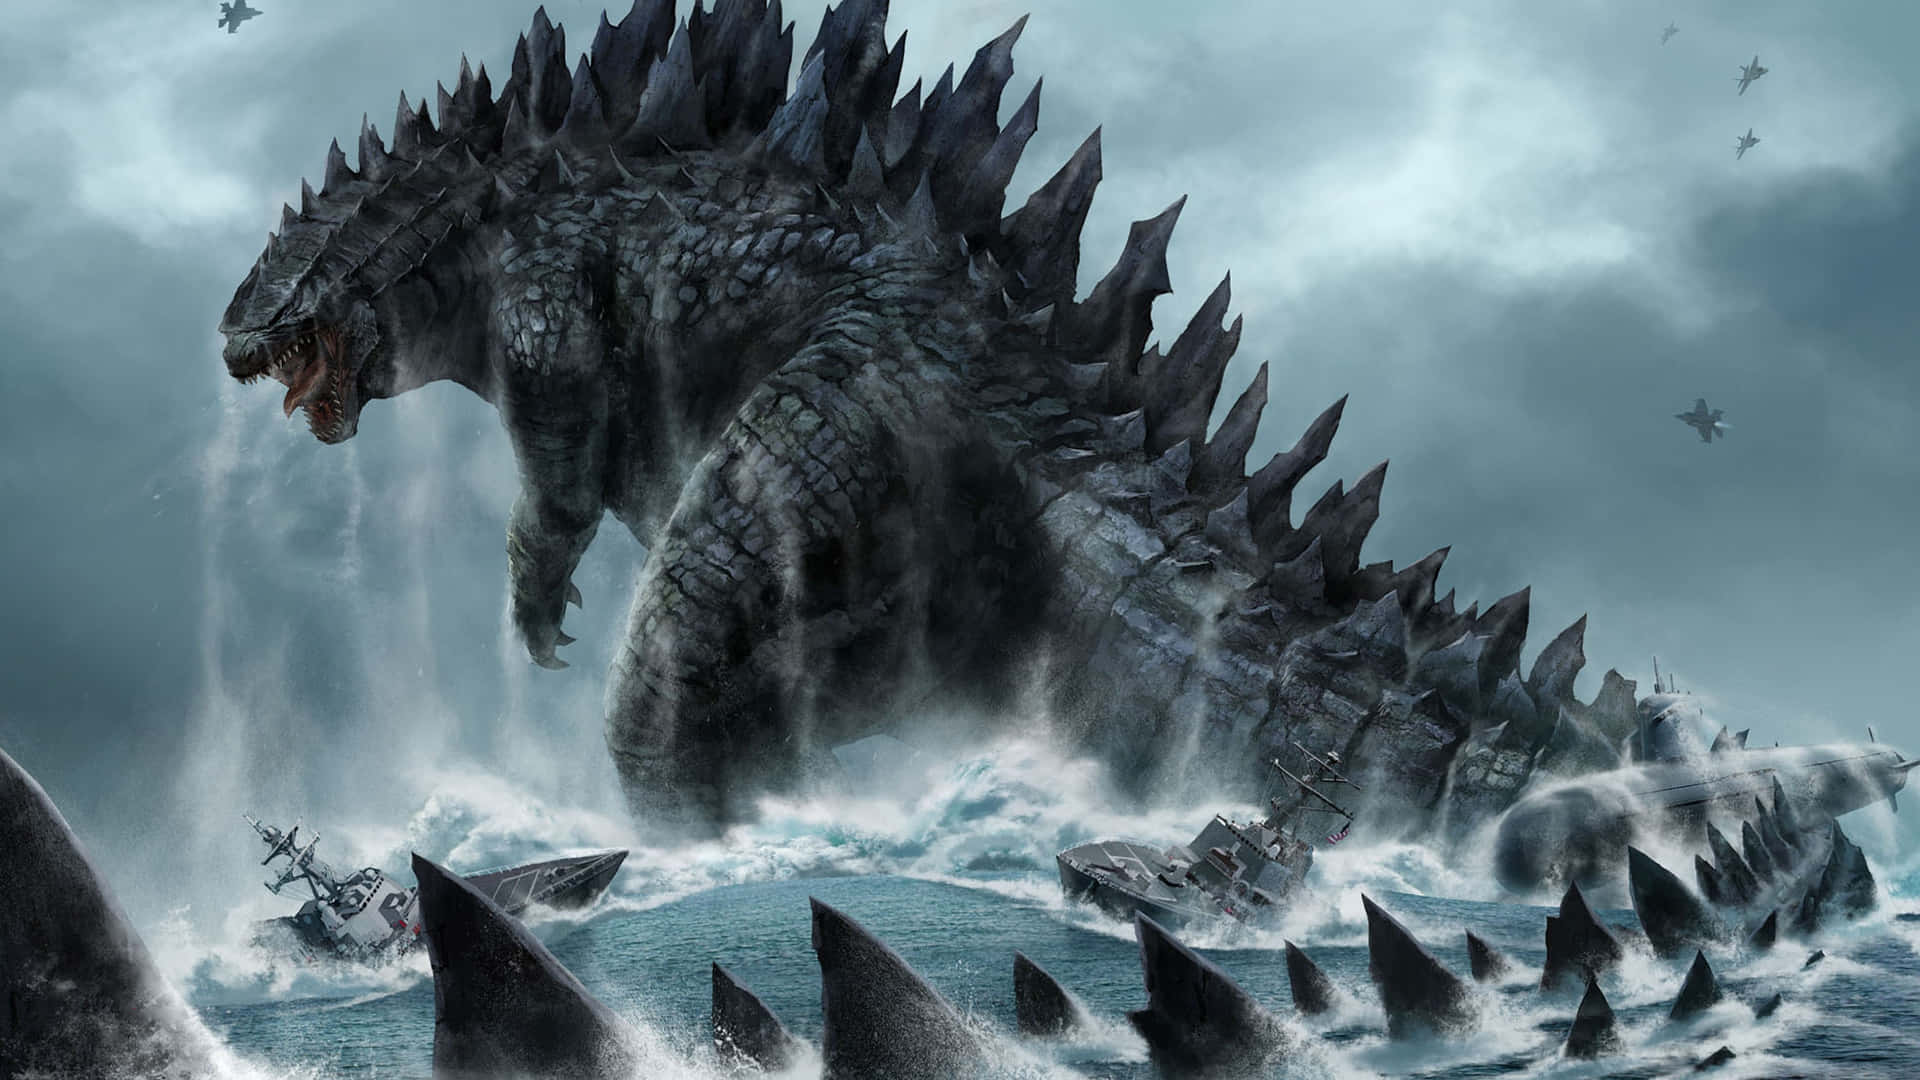 Godzilla Rampaging Through the City Wallpaper